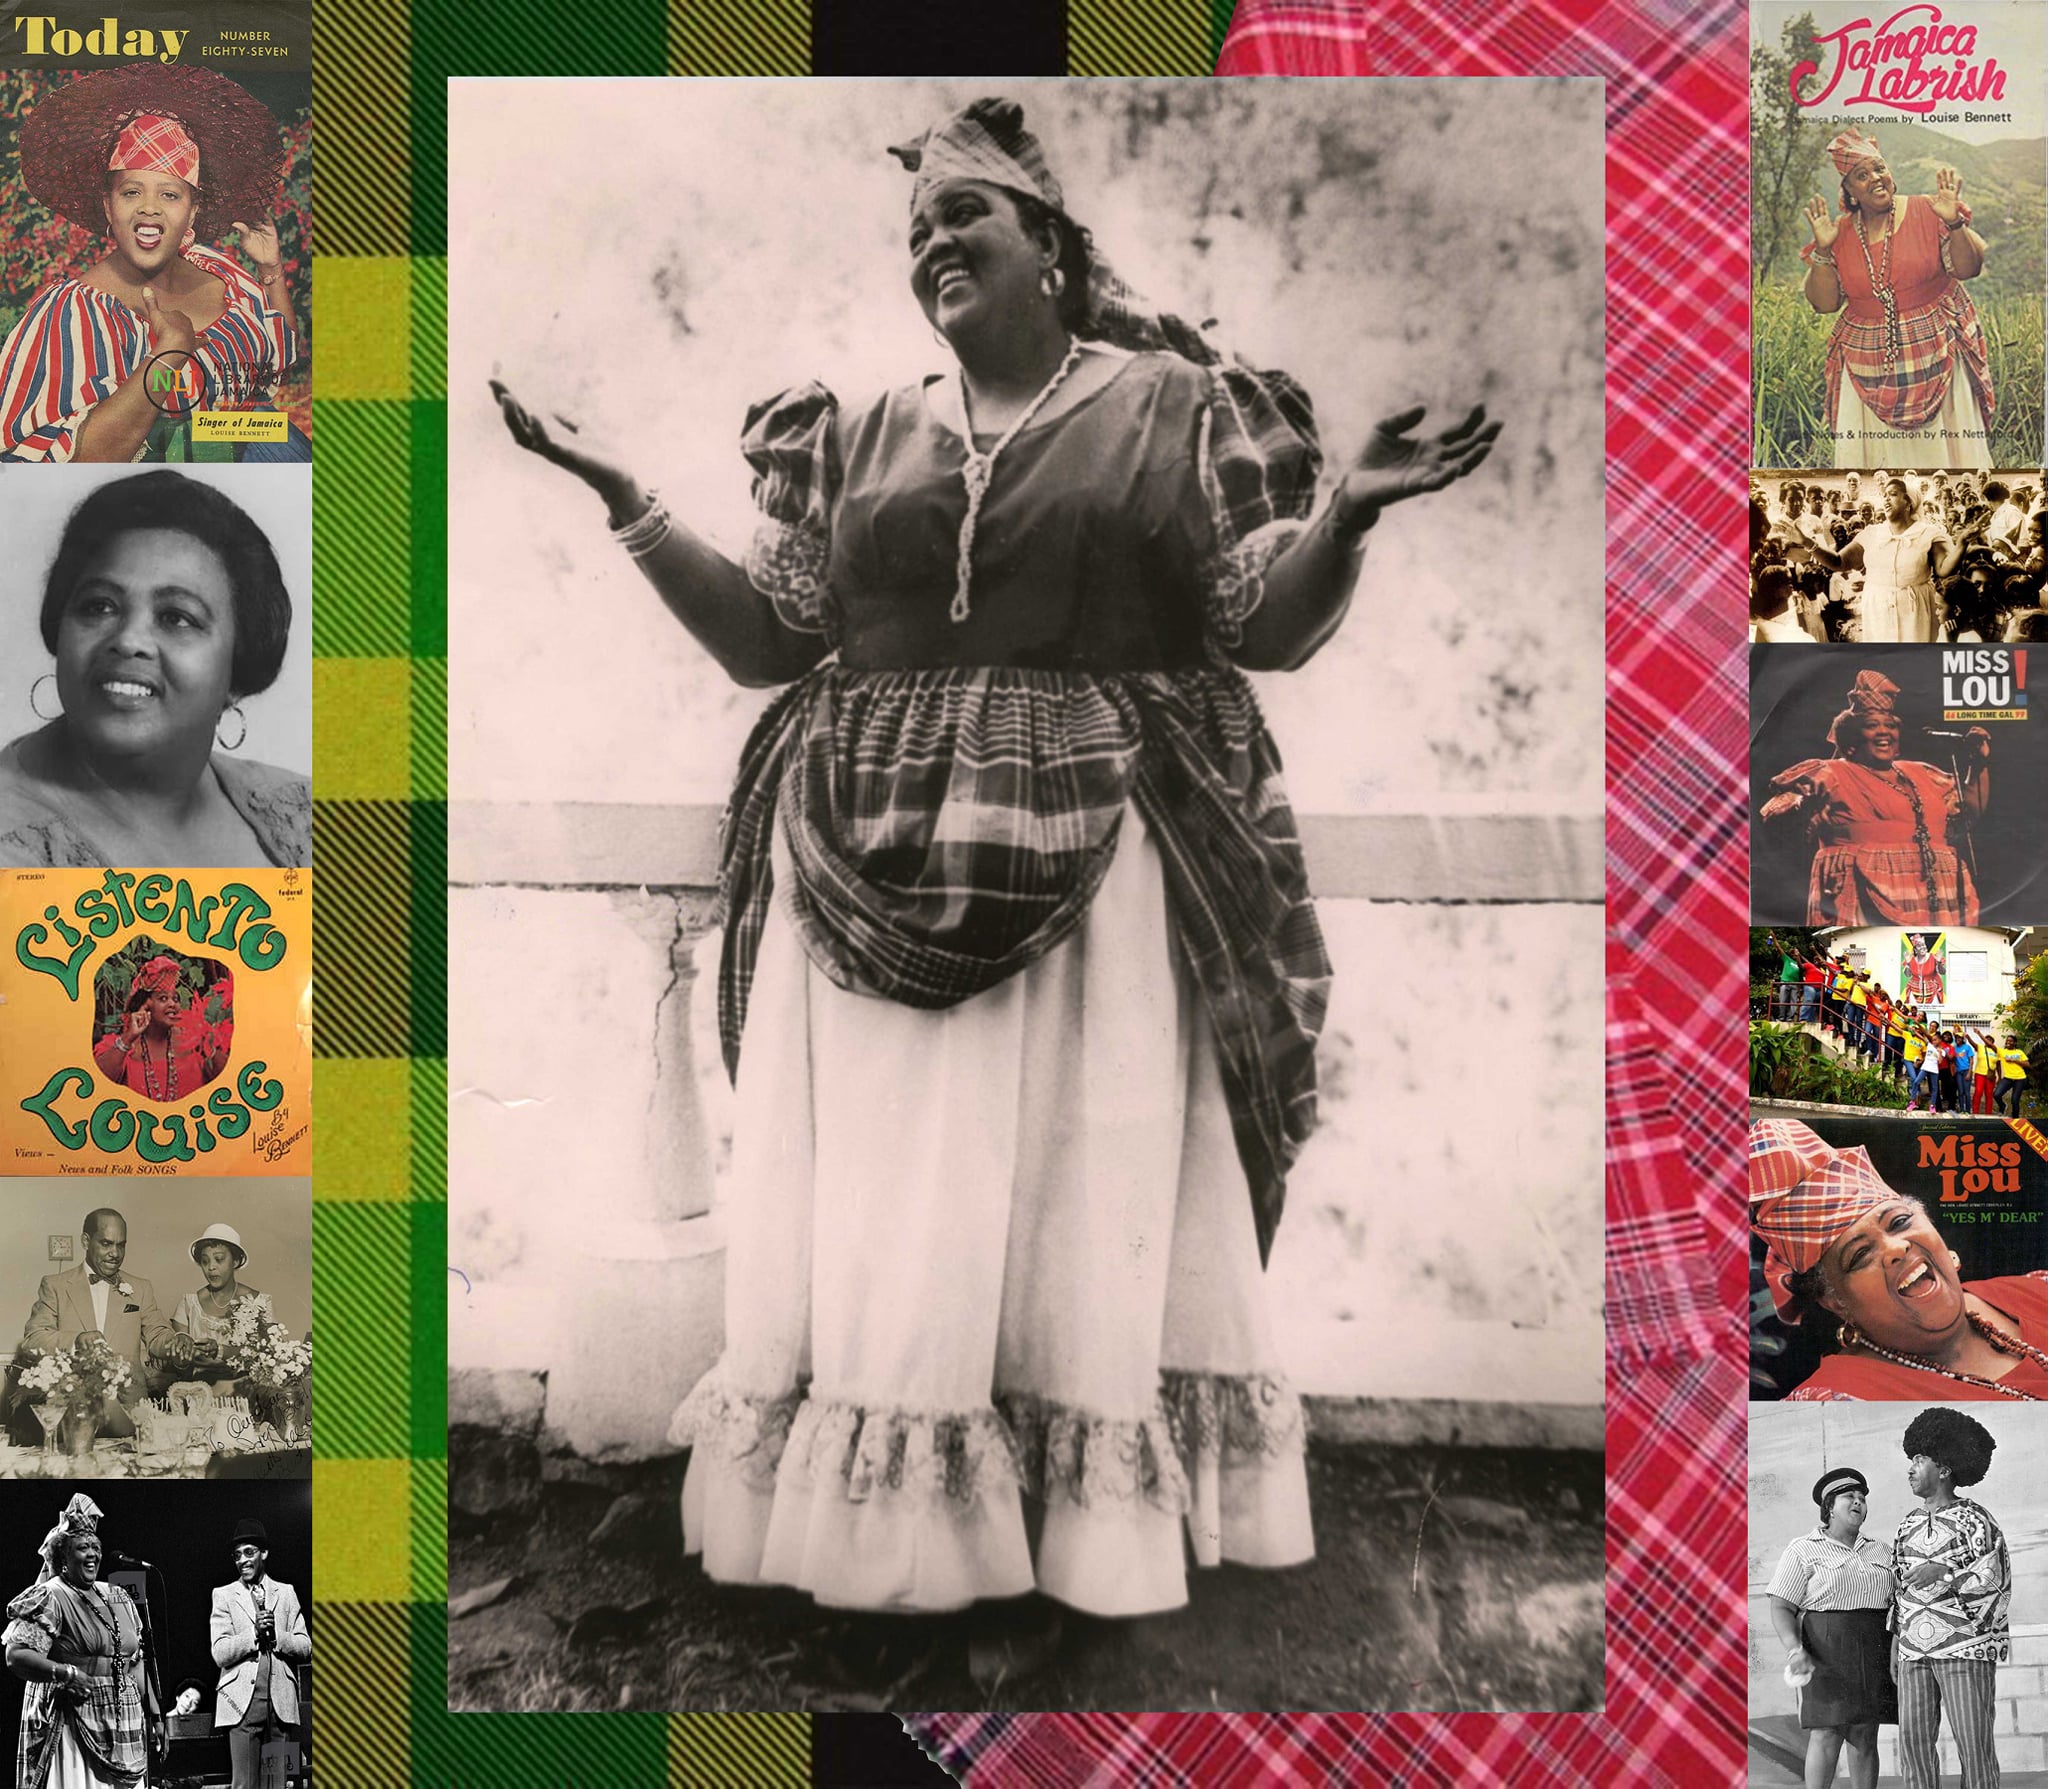 Wayne Chen on X: Louise Bennett-Coverley (7 Sep 1919 – 26 Jul 2006)  Legendary Jamaican poet, Folklorist, Writer, & Educator born 102 years  ago today, in Kingston. Wrote & performed her poems